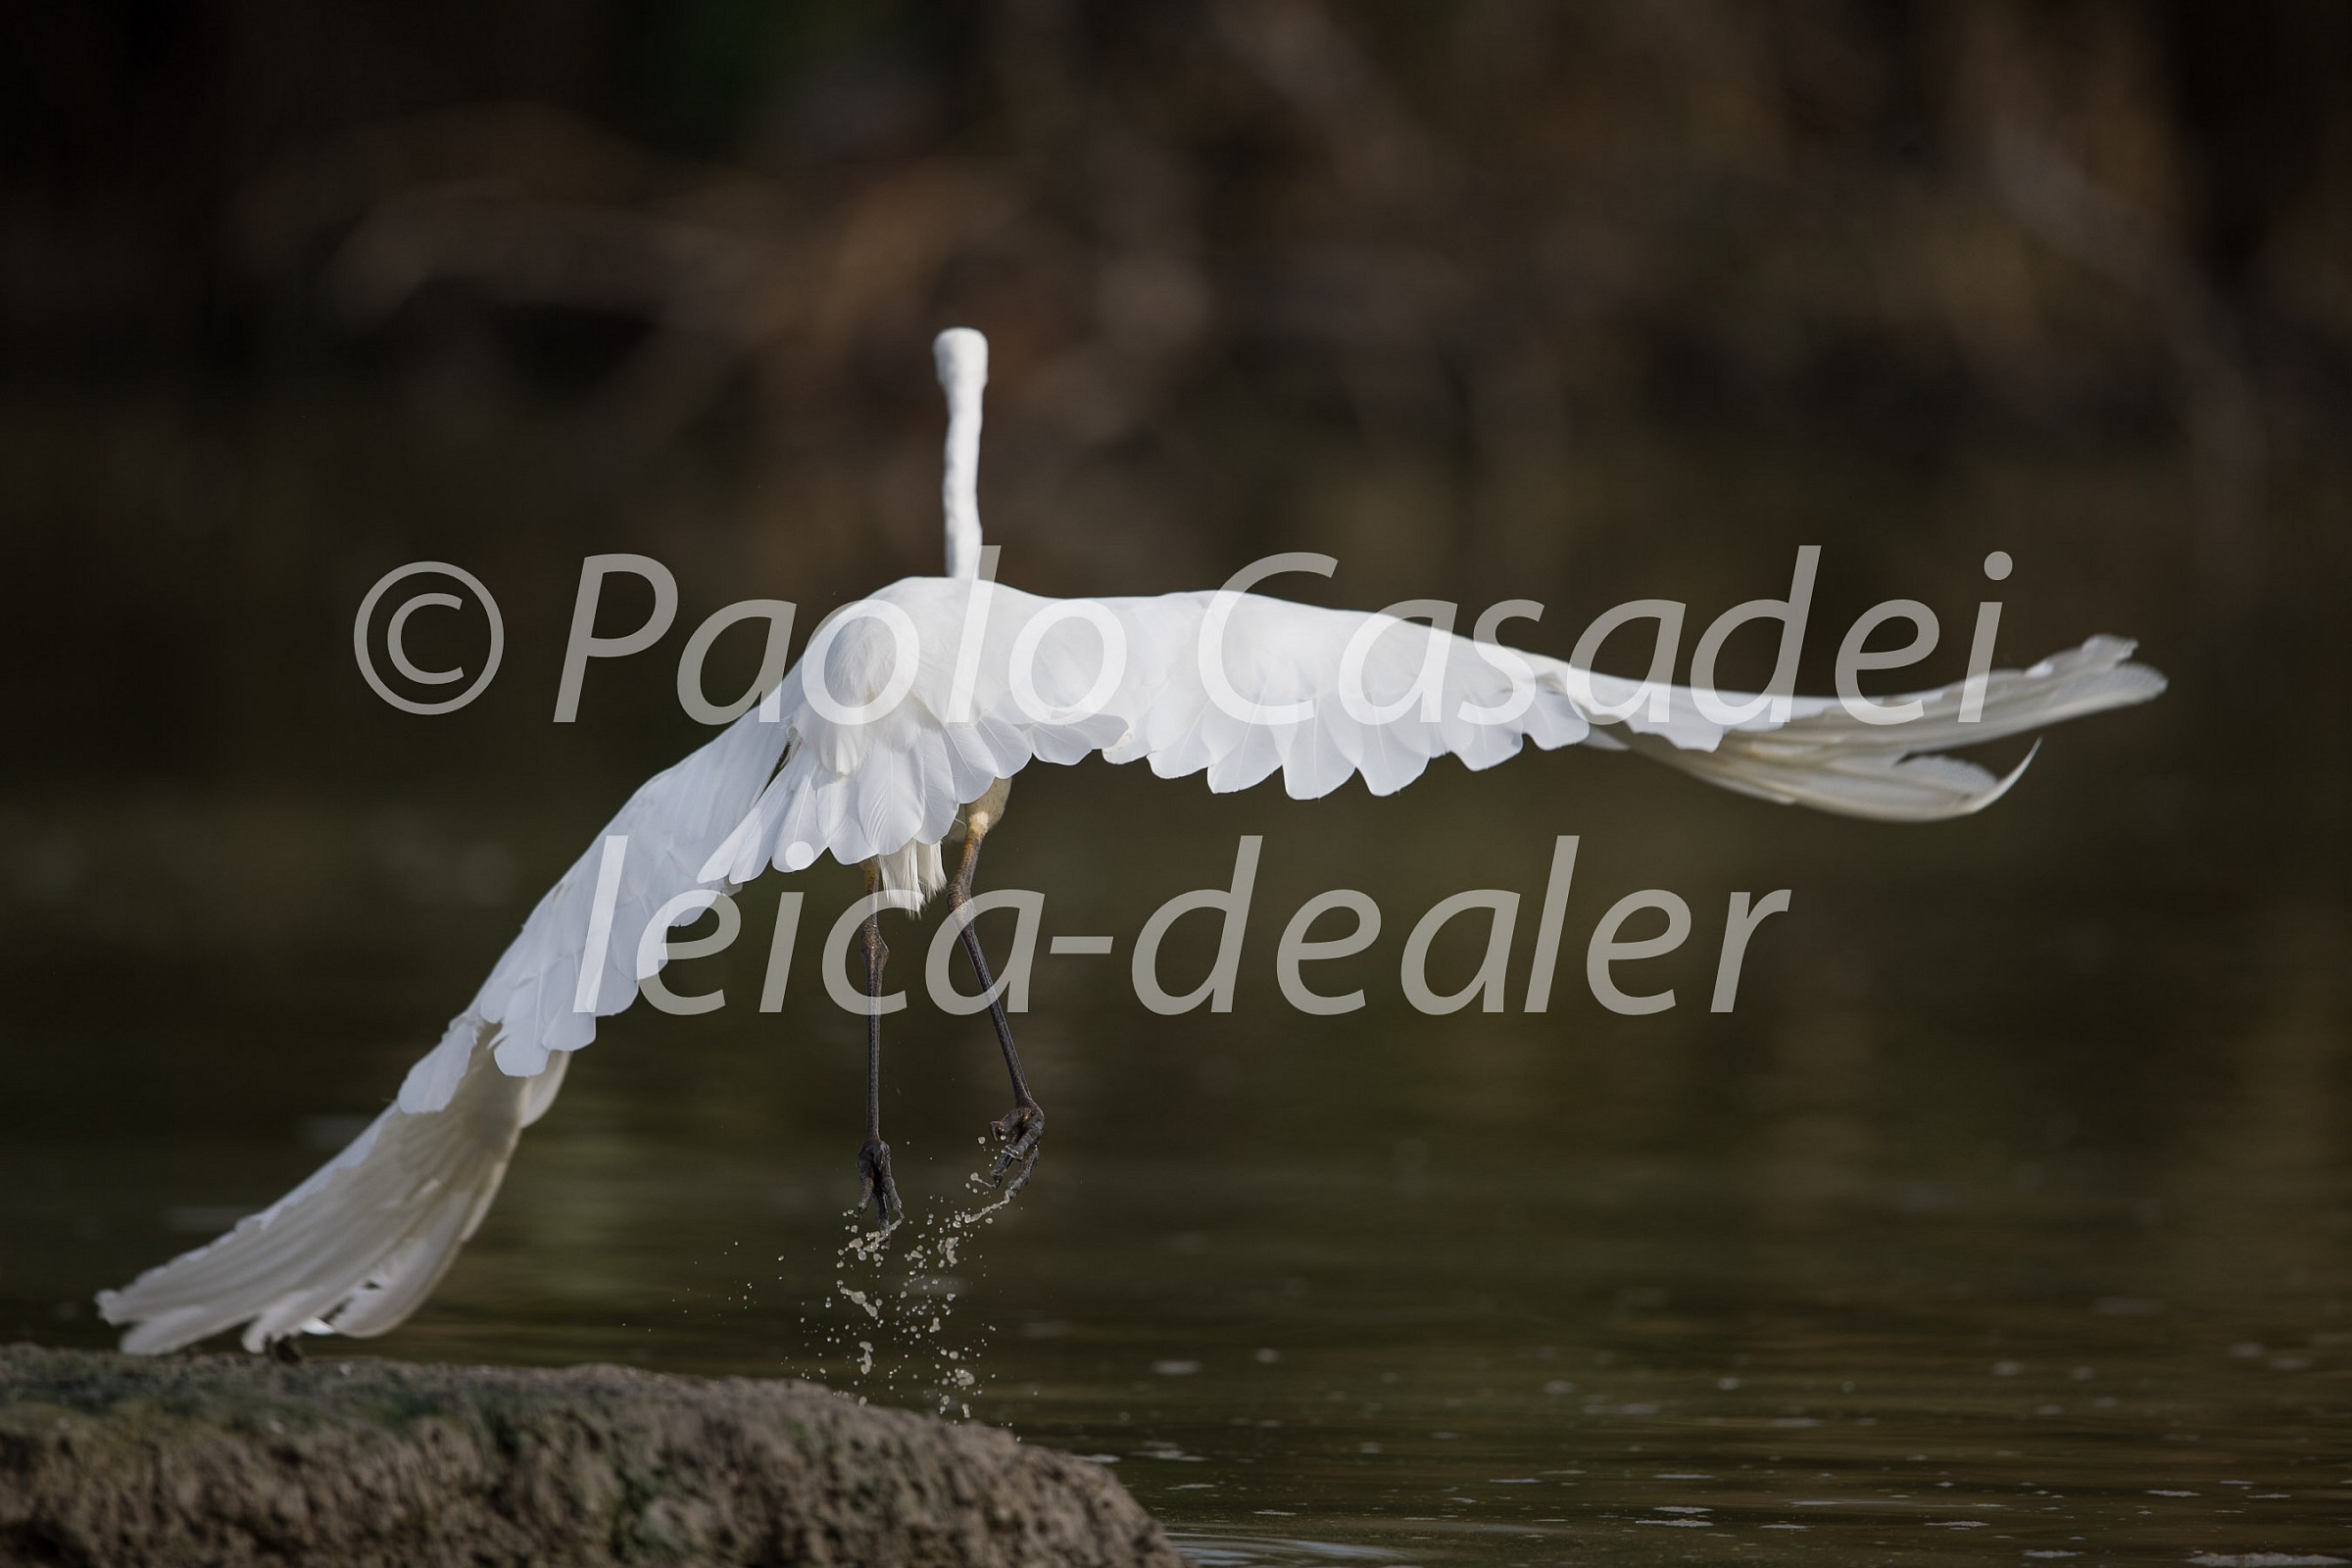 Great White Egret...